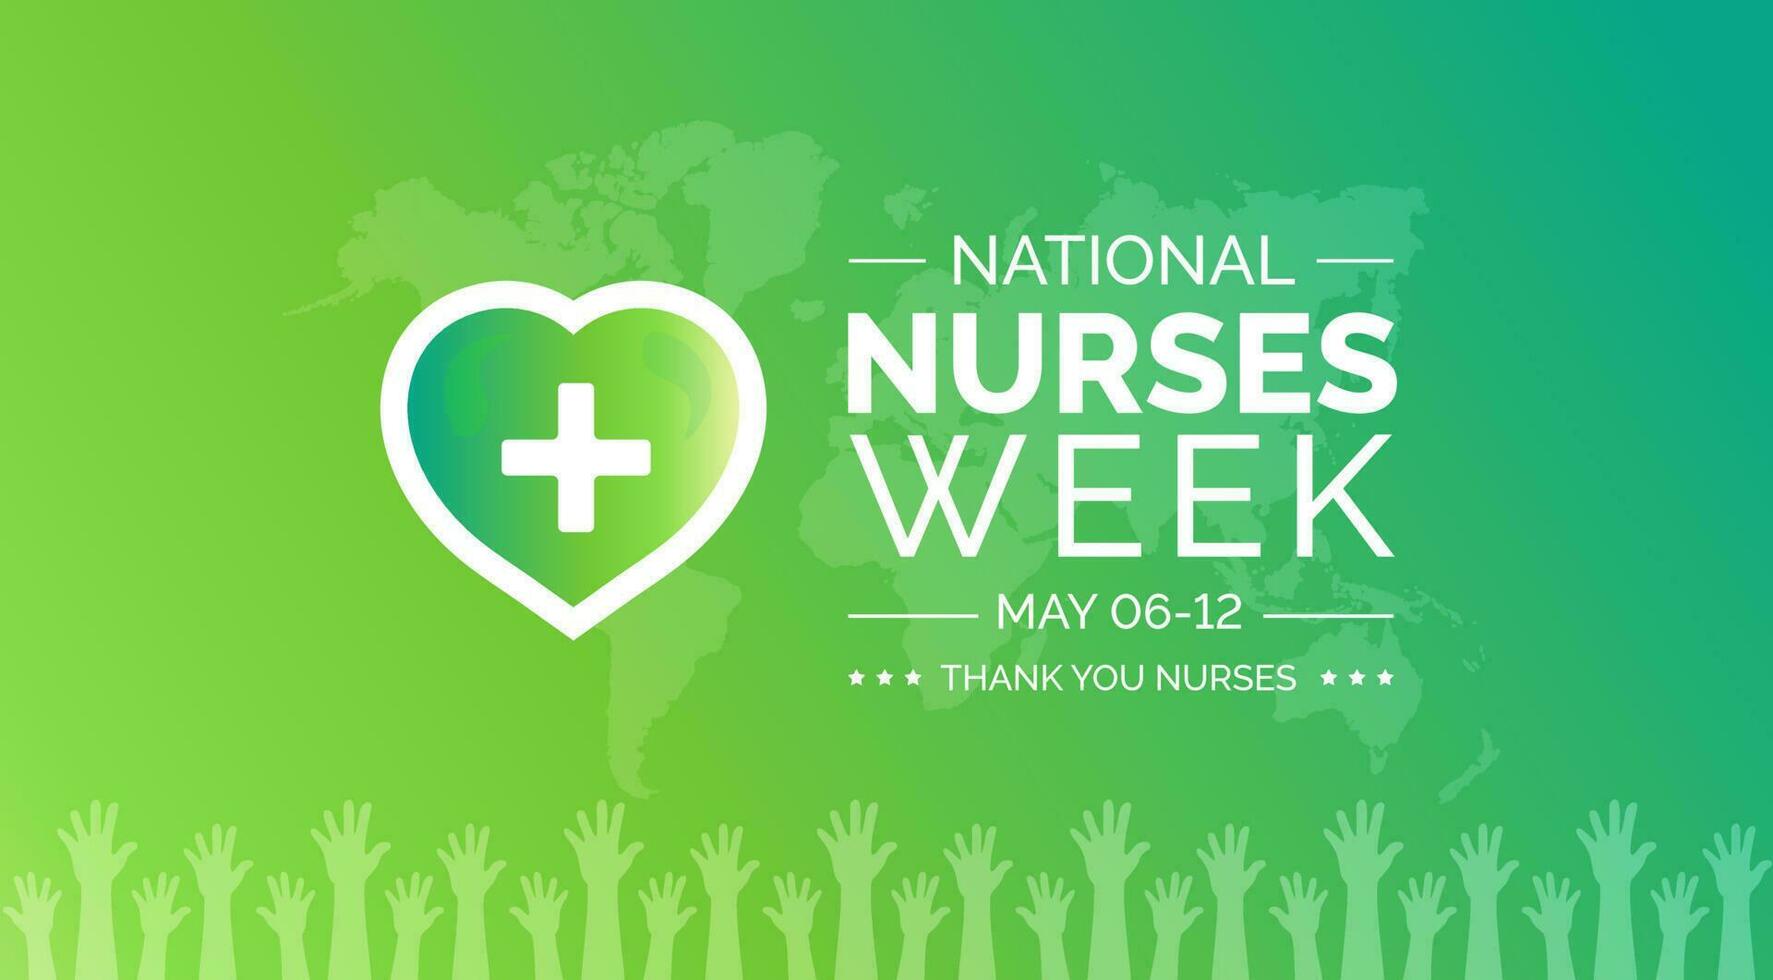 nationaal verpleegsters week achtergrond of banier ontwerp sjabloon gevierd in mei vector